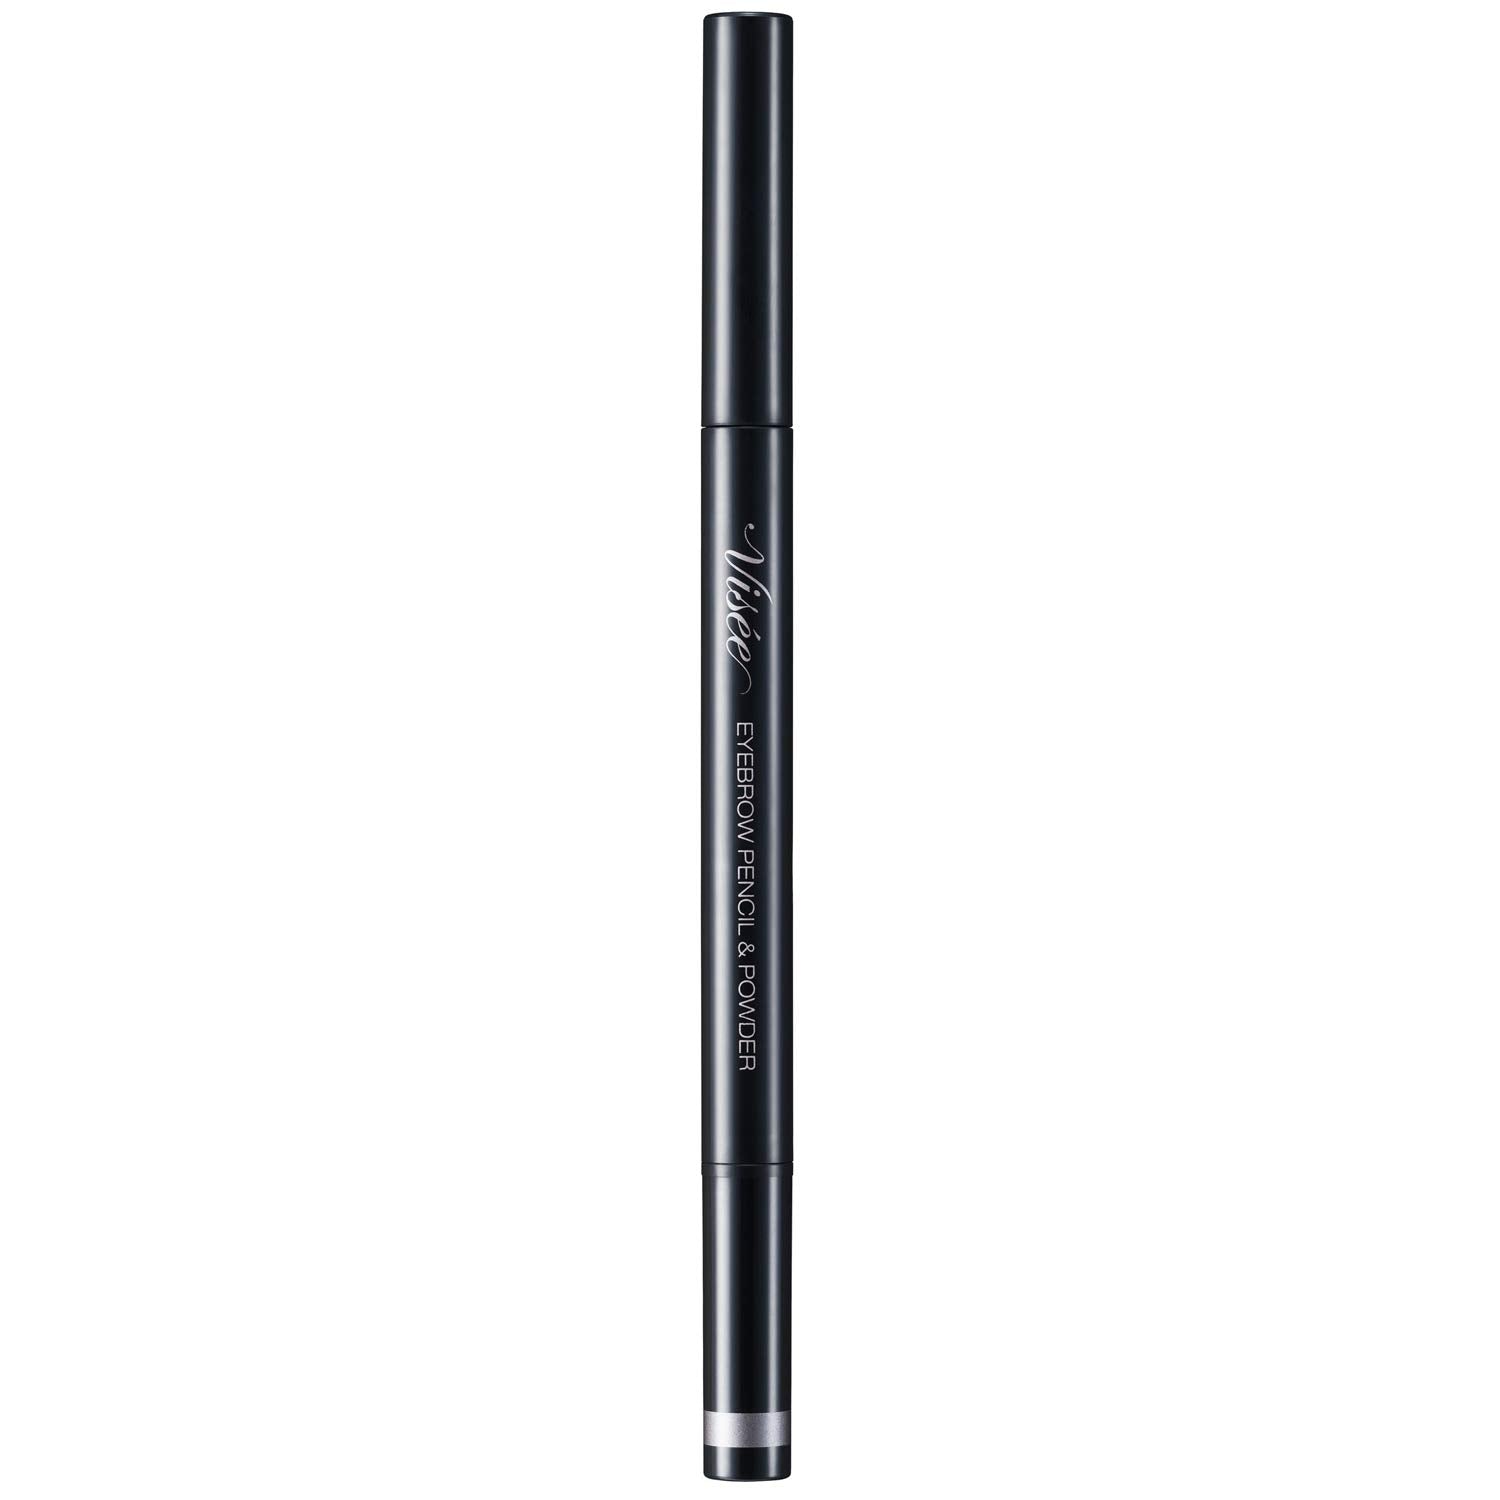 Orbis Pencil Eyeliner 02 - Long-Lasting Refill Eyeliner from Orbis